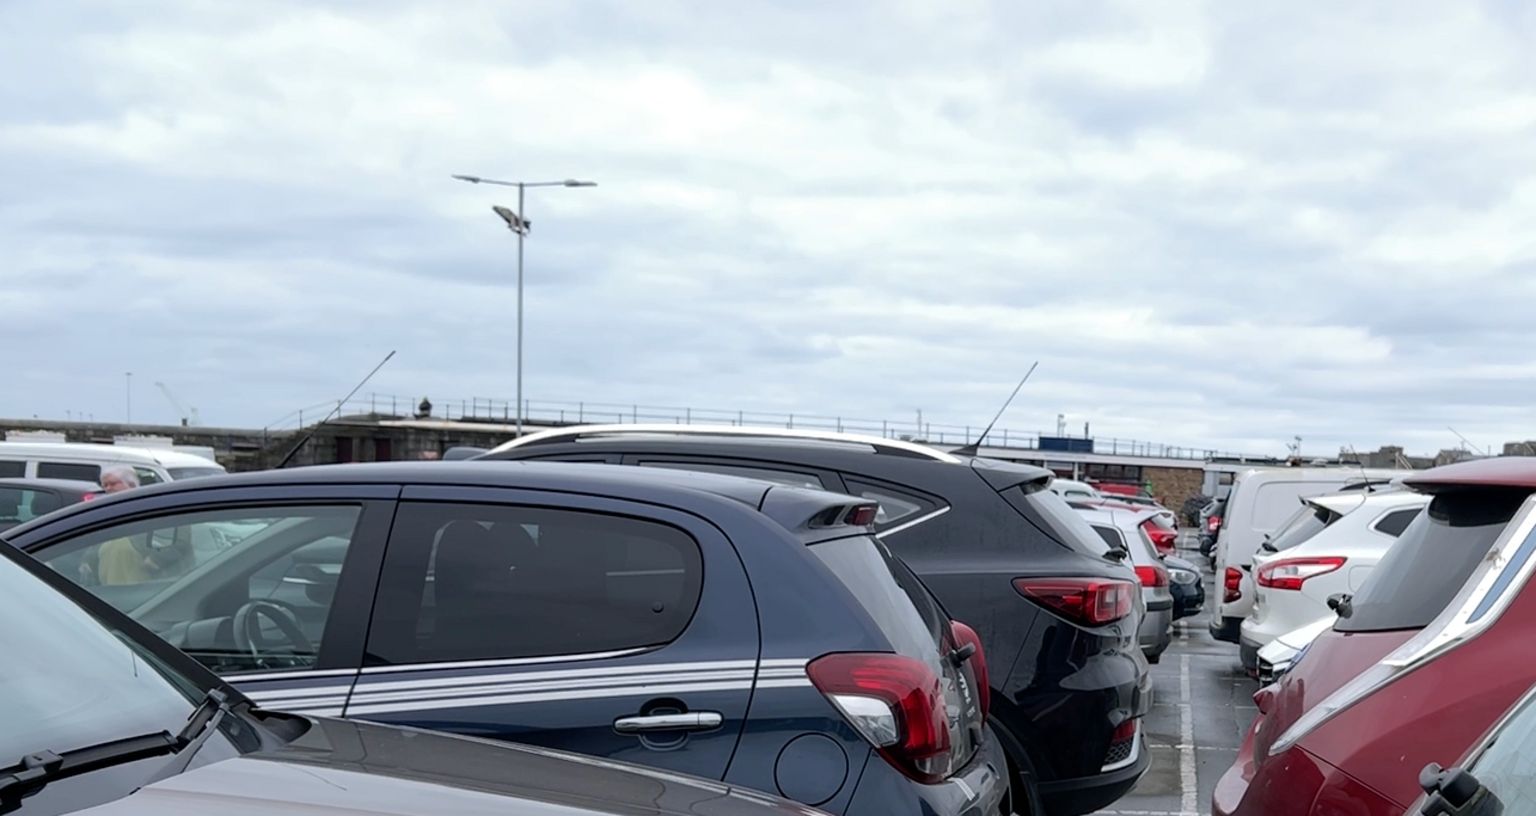 Parking in St Peter Port